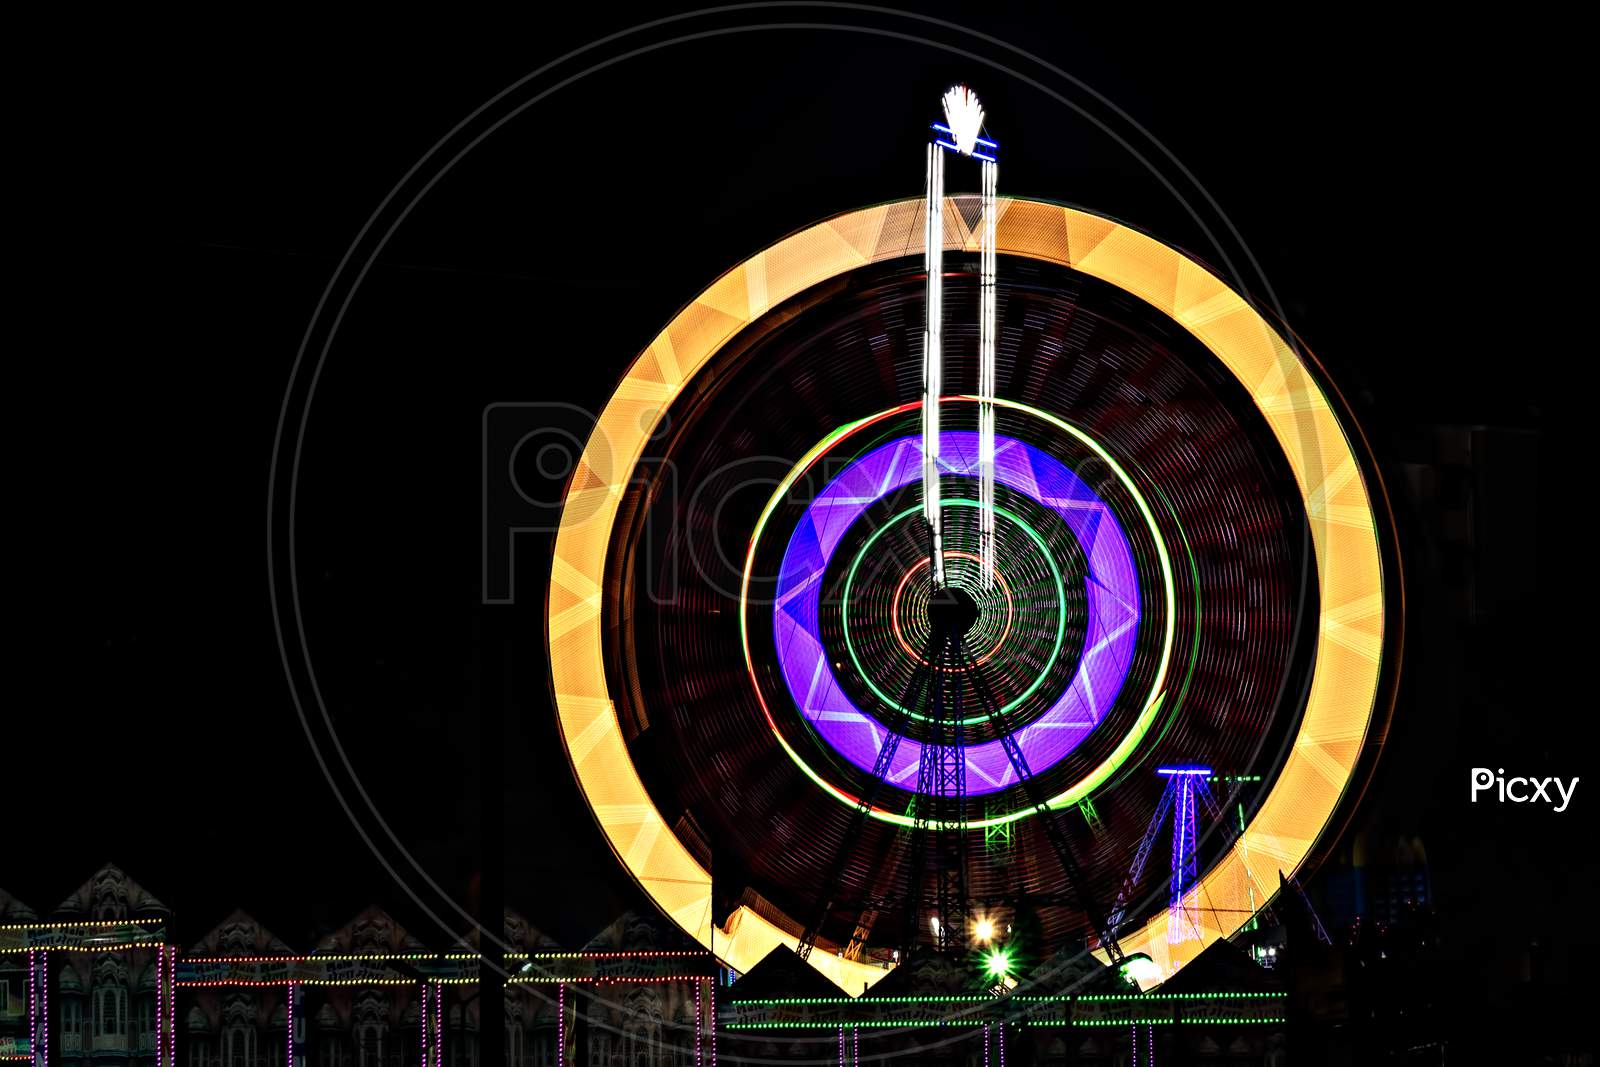 Fun Fair Giant Ferris Wheel Spinning At Night. A Rotating Giant Wheel At Night.